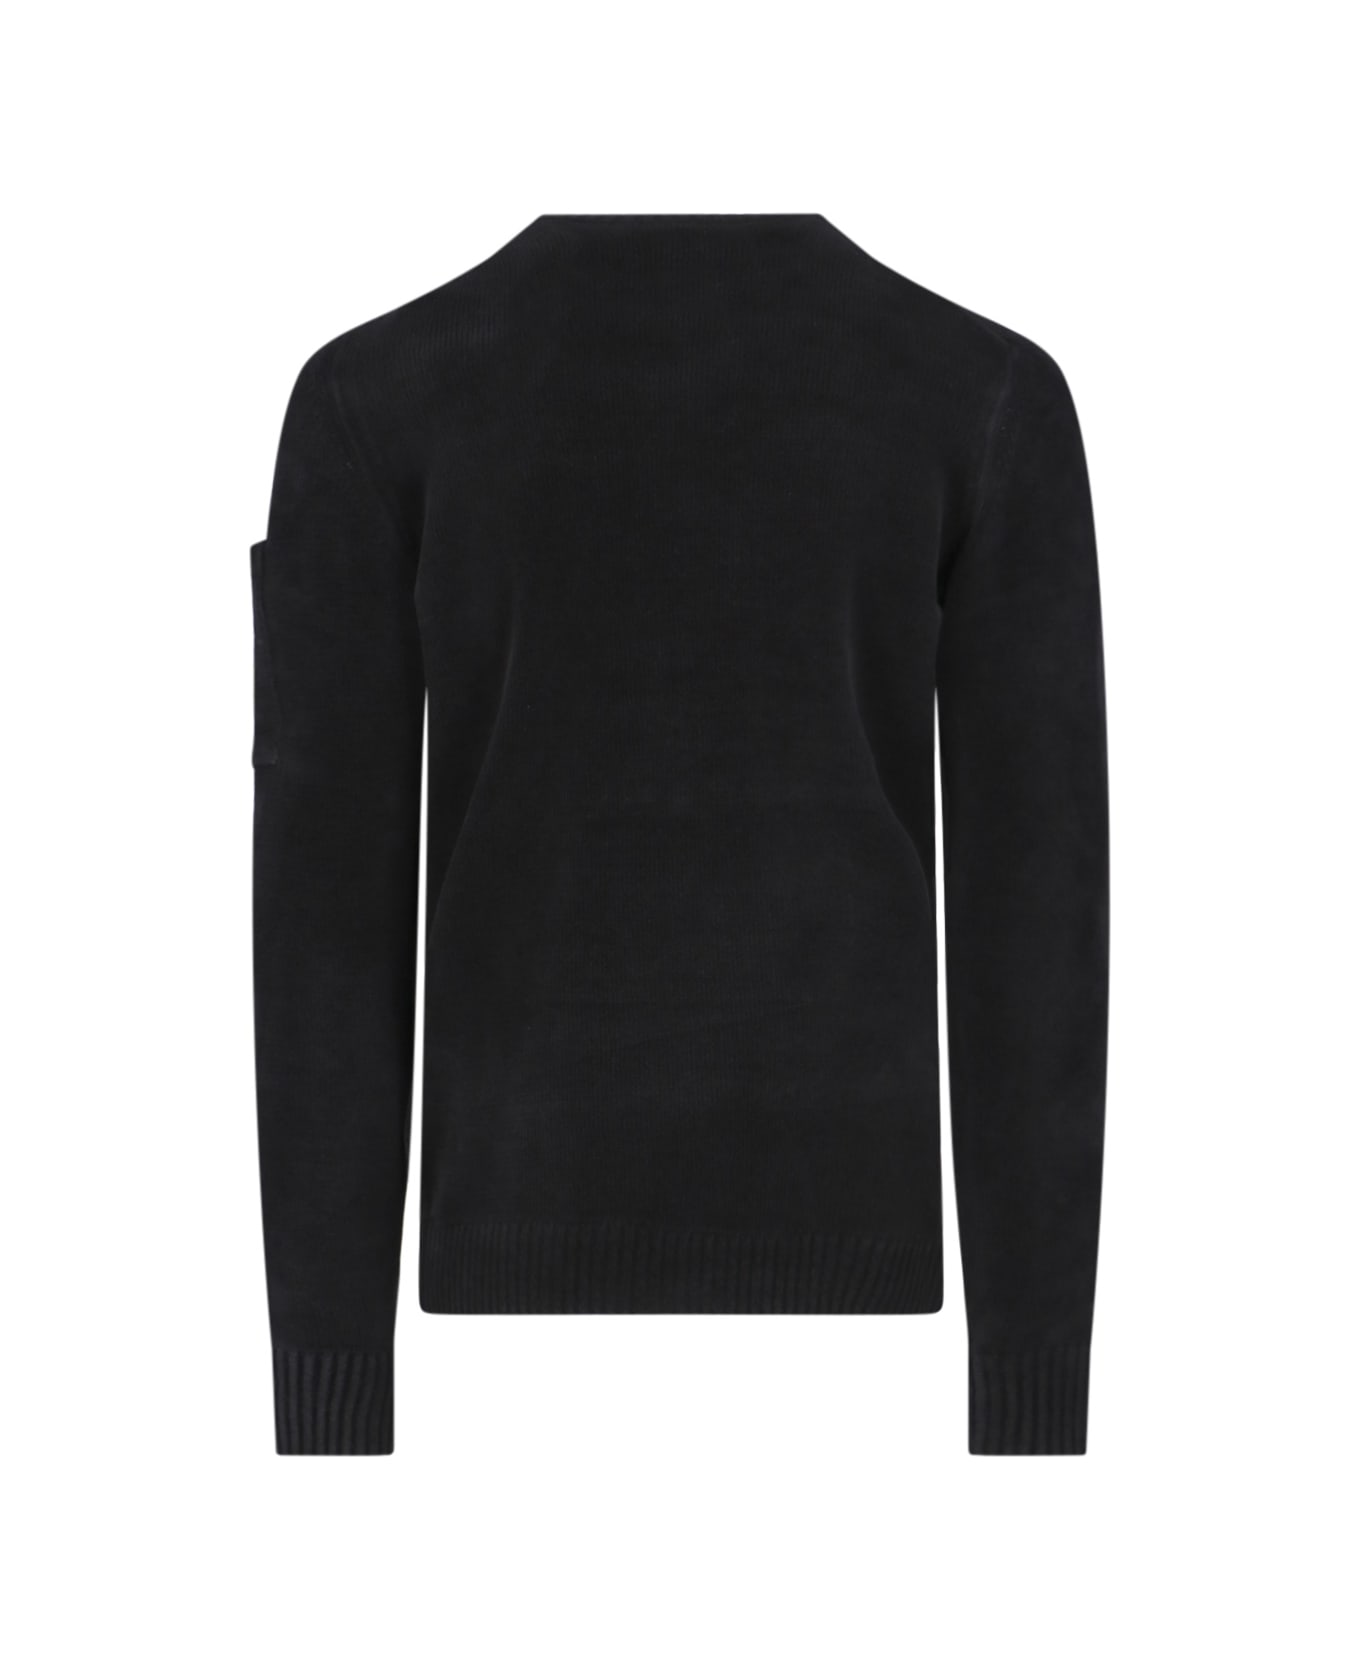 C.P. Company Chenille Sweater - Black   ニットウェア